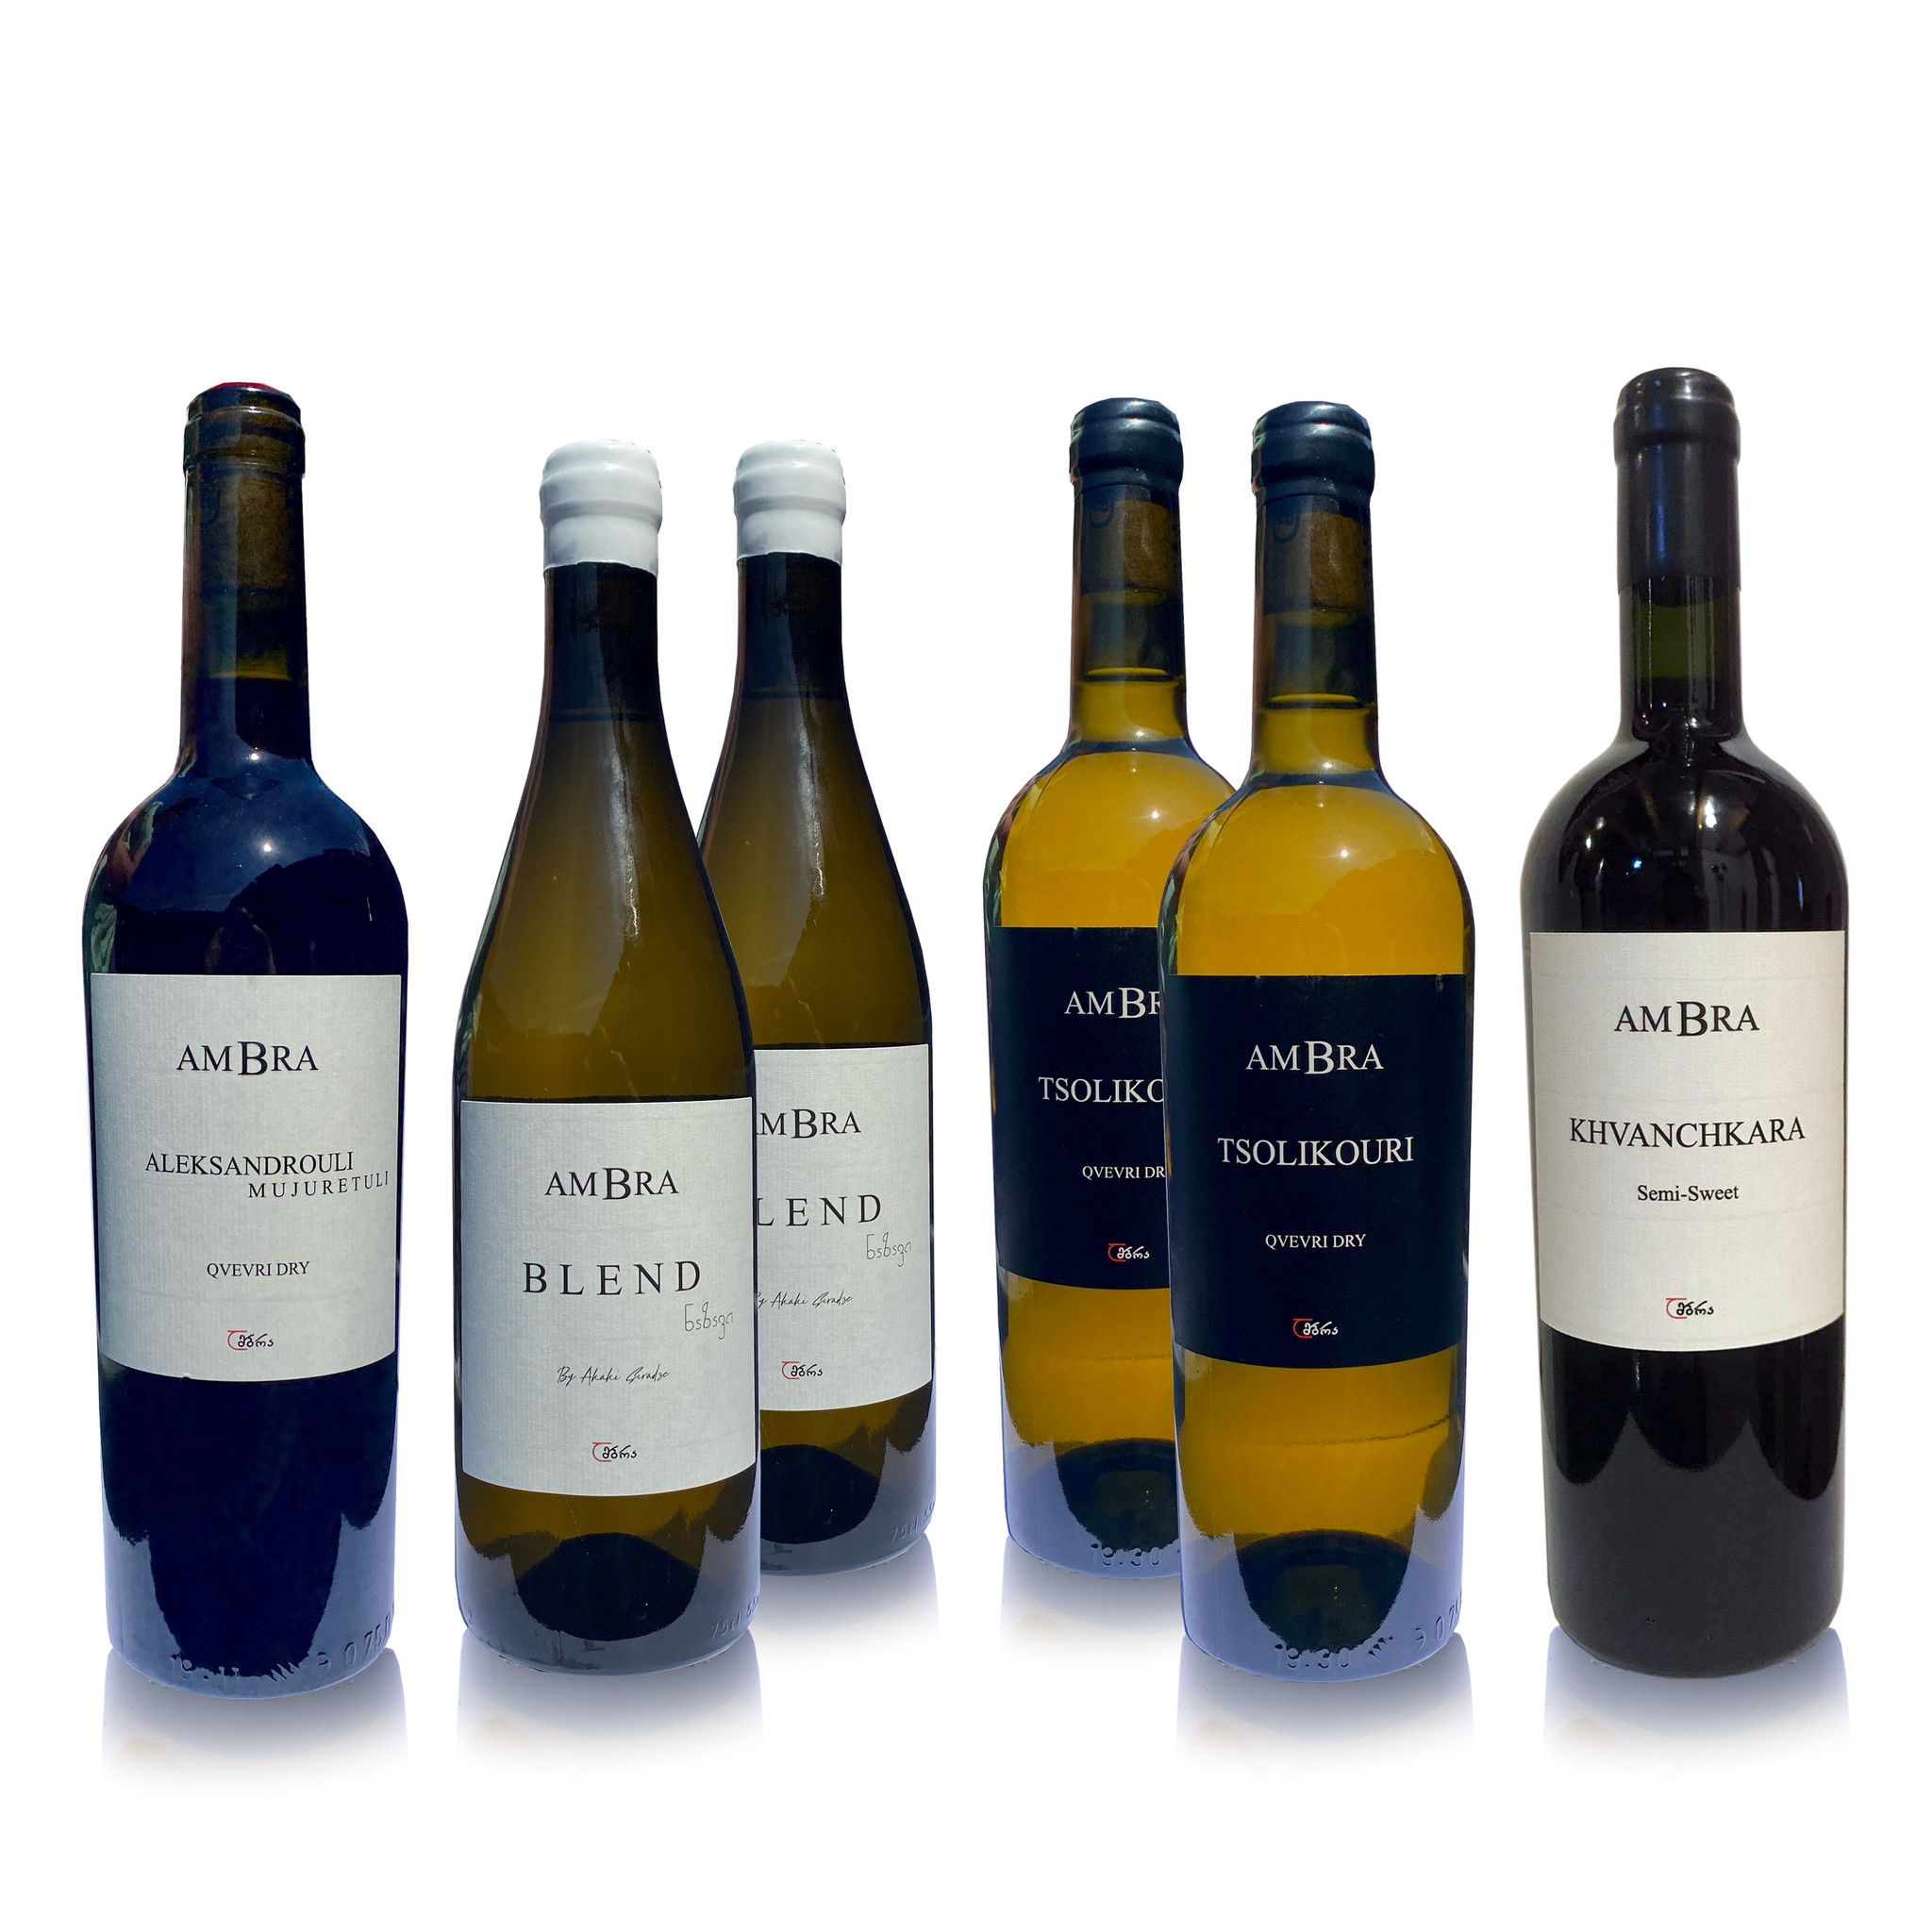 AMBRA AMBRA wine tasting package (6x)